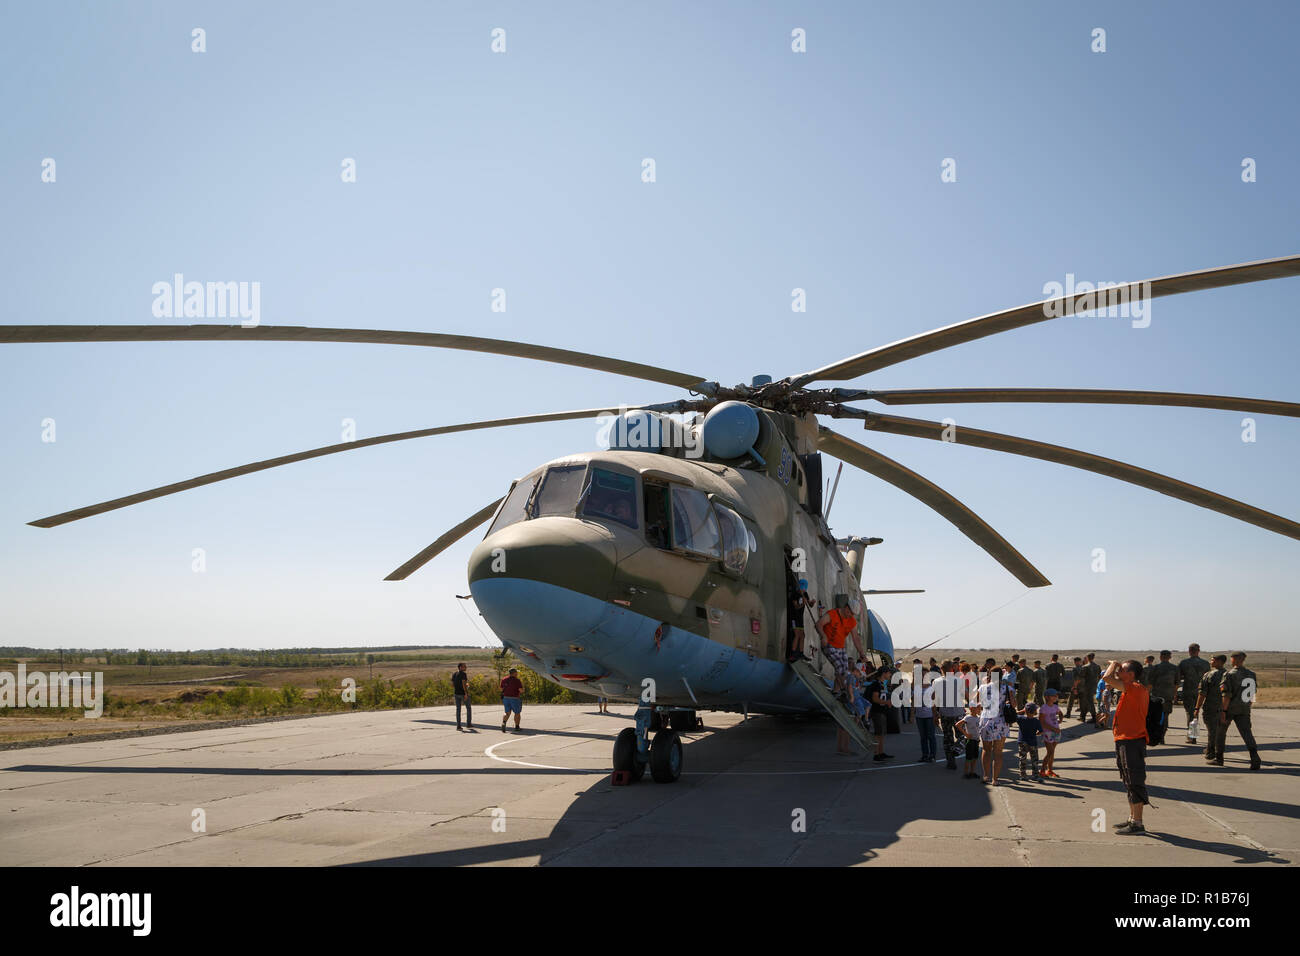 KADAMOVSKIY TRAINING GROUND, ROSTOV REGION, RUSSIA, 26 AUGUST 2018: Transport universal military helicopter MI-26 Stock Photo